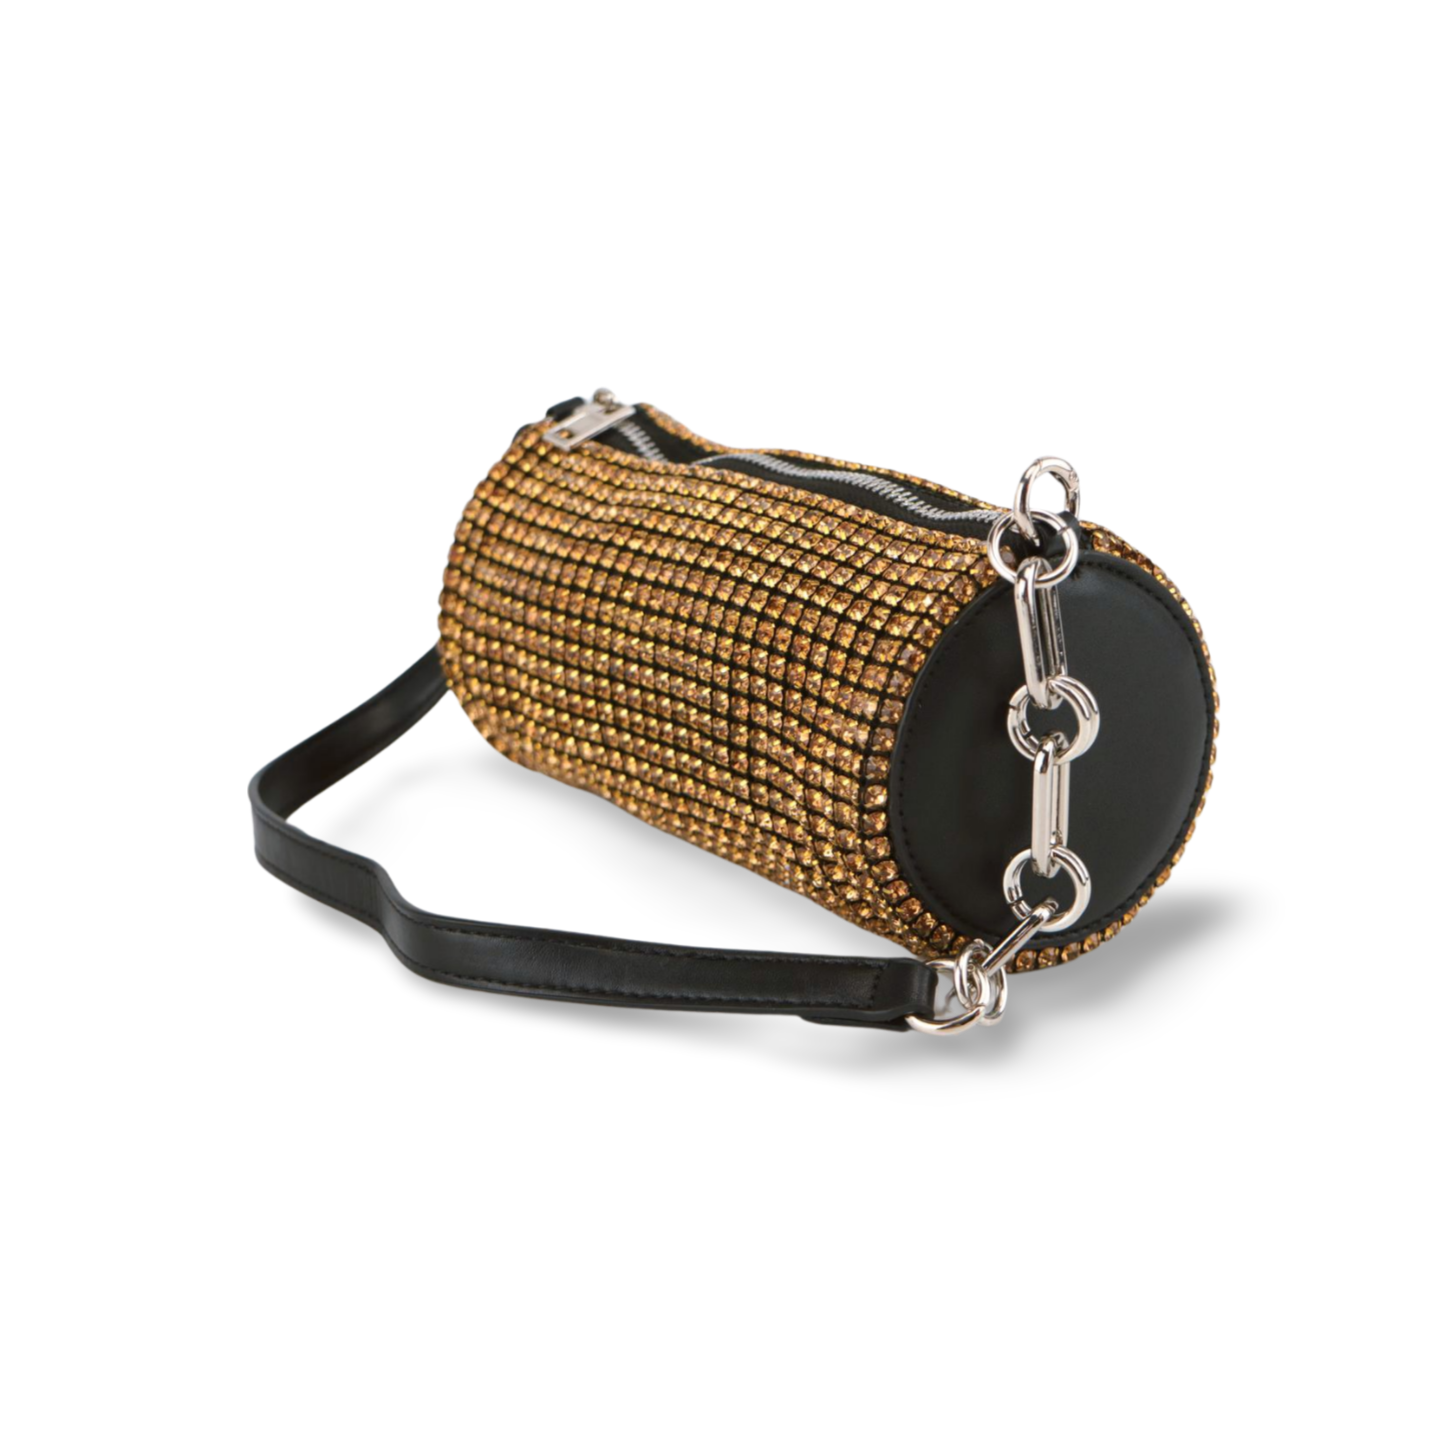 Silver and Gold Rhinestones Clutch Cylinder Evening Handbag For Women